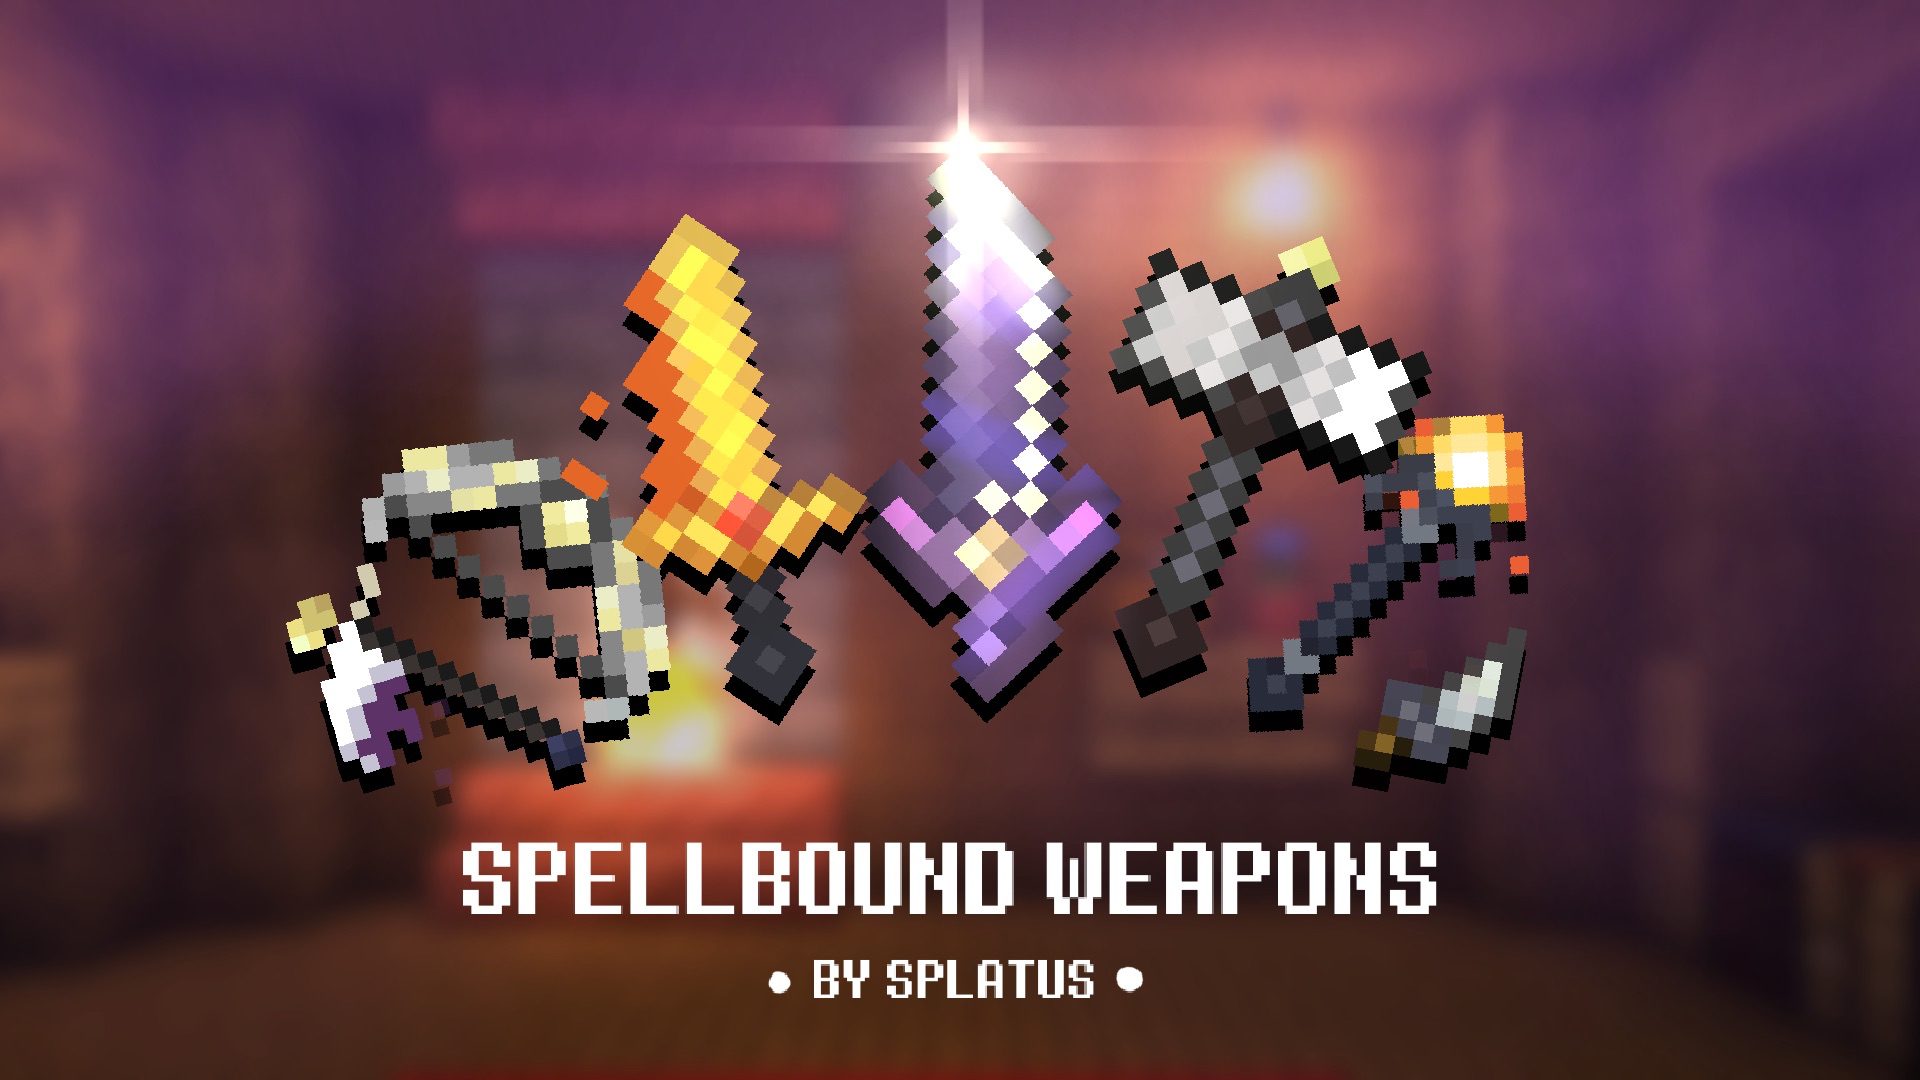 Swords And Weapons 1.19.4 [Power Swords] Minecraft Mod